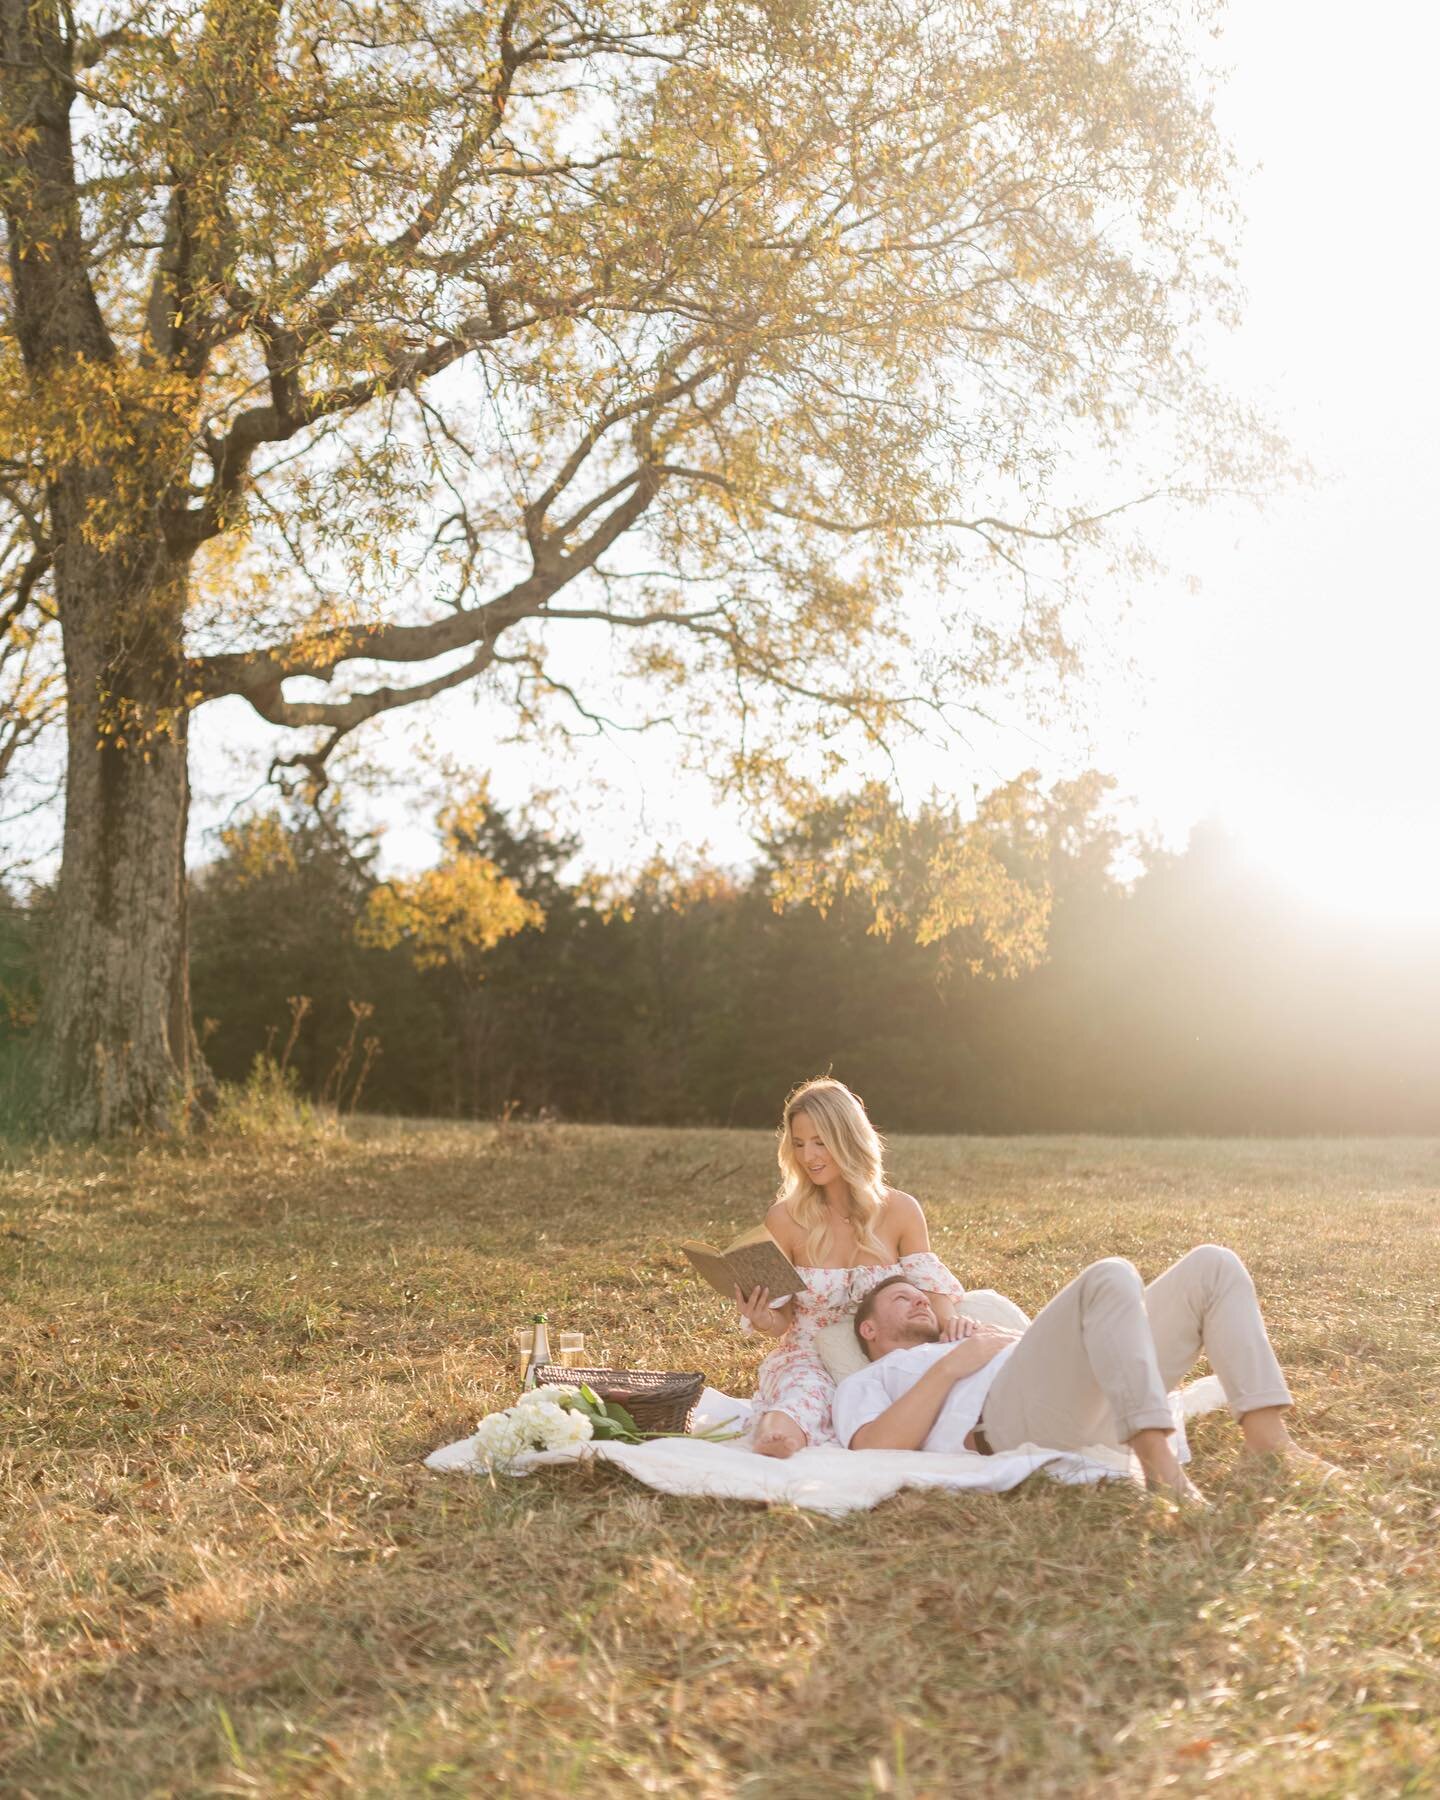 This golden hour engagement shoot is STUNNING!
.
.
📸: @kristinfayephotography 
@candiceismorgan
.
.
#goldenhourphotography #weddingvenue #justengaged #atlwedding #northgeorgia #georgiawedding #2024bride